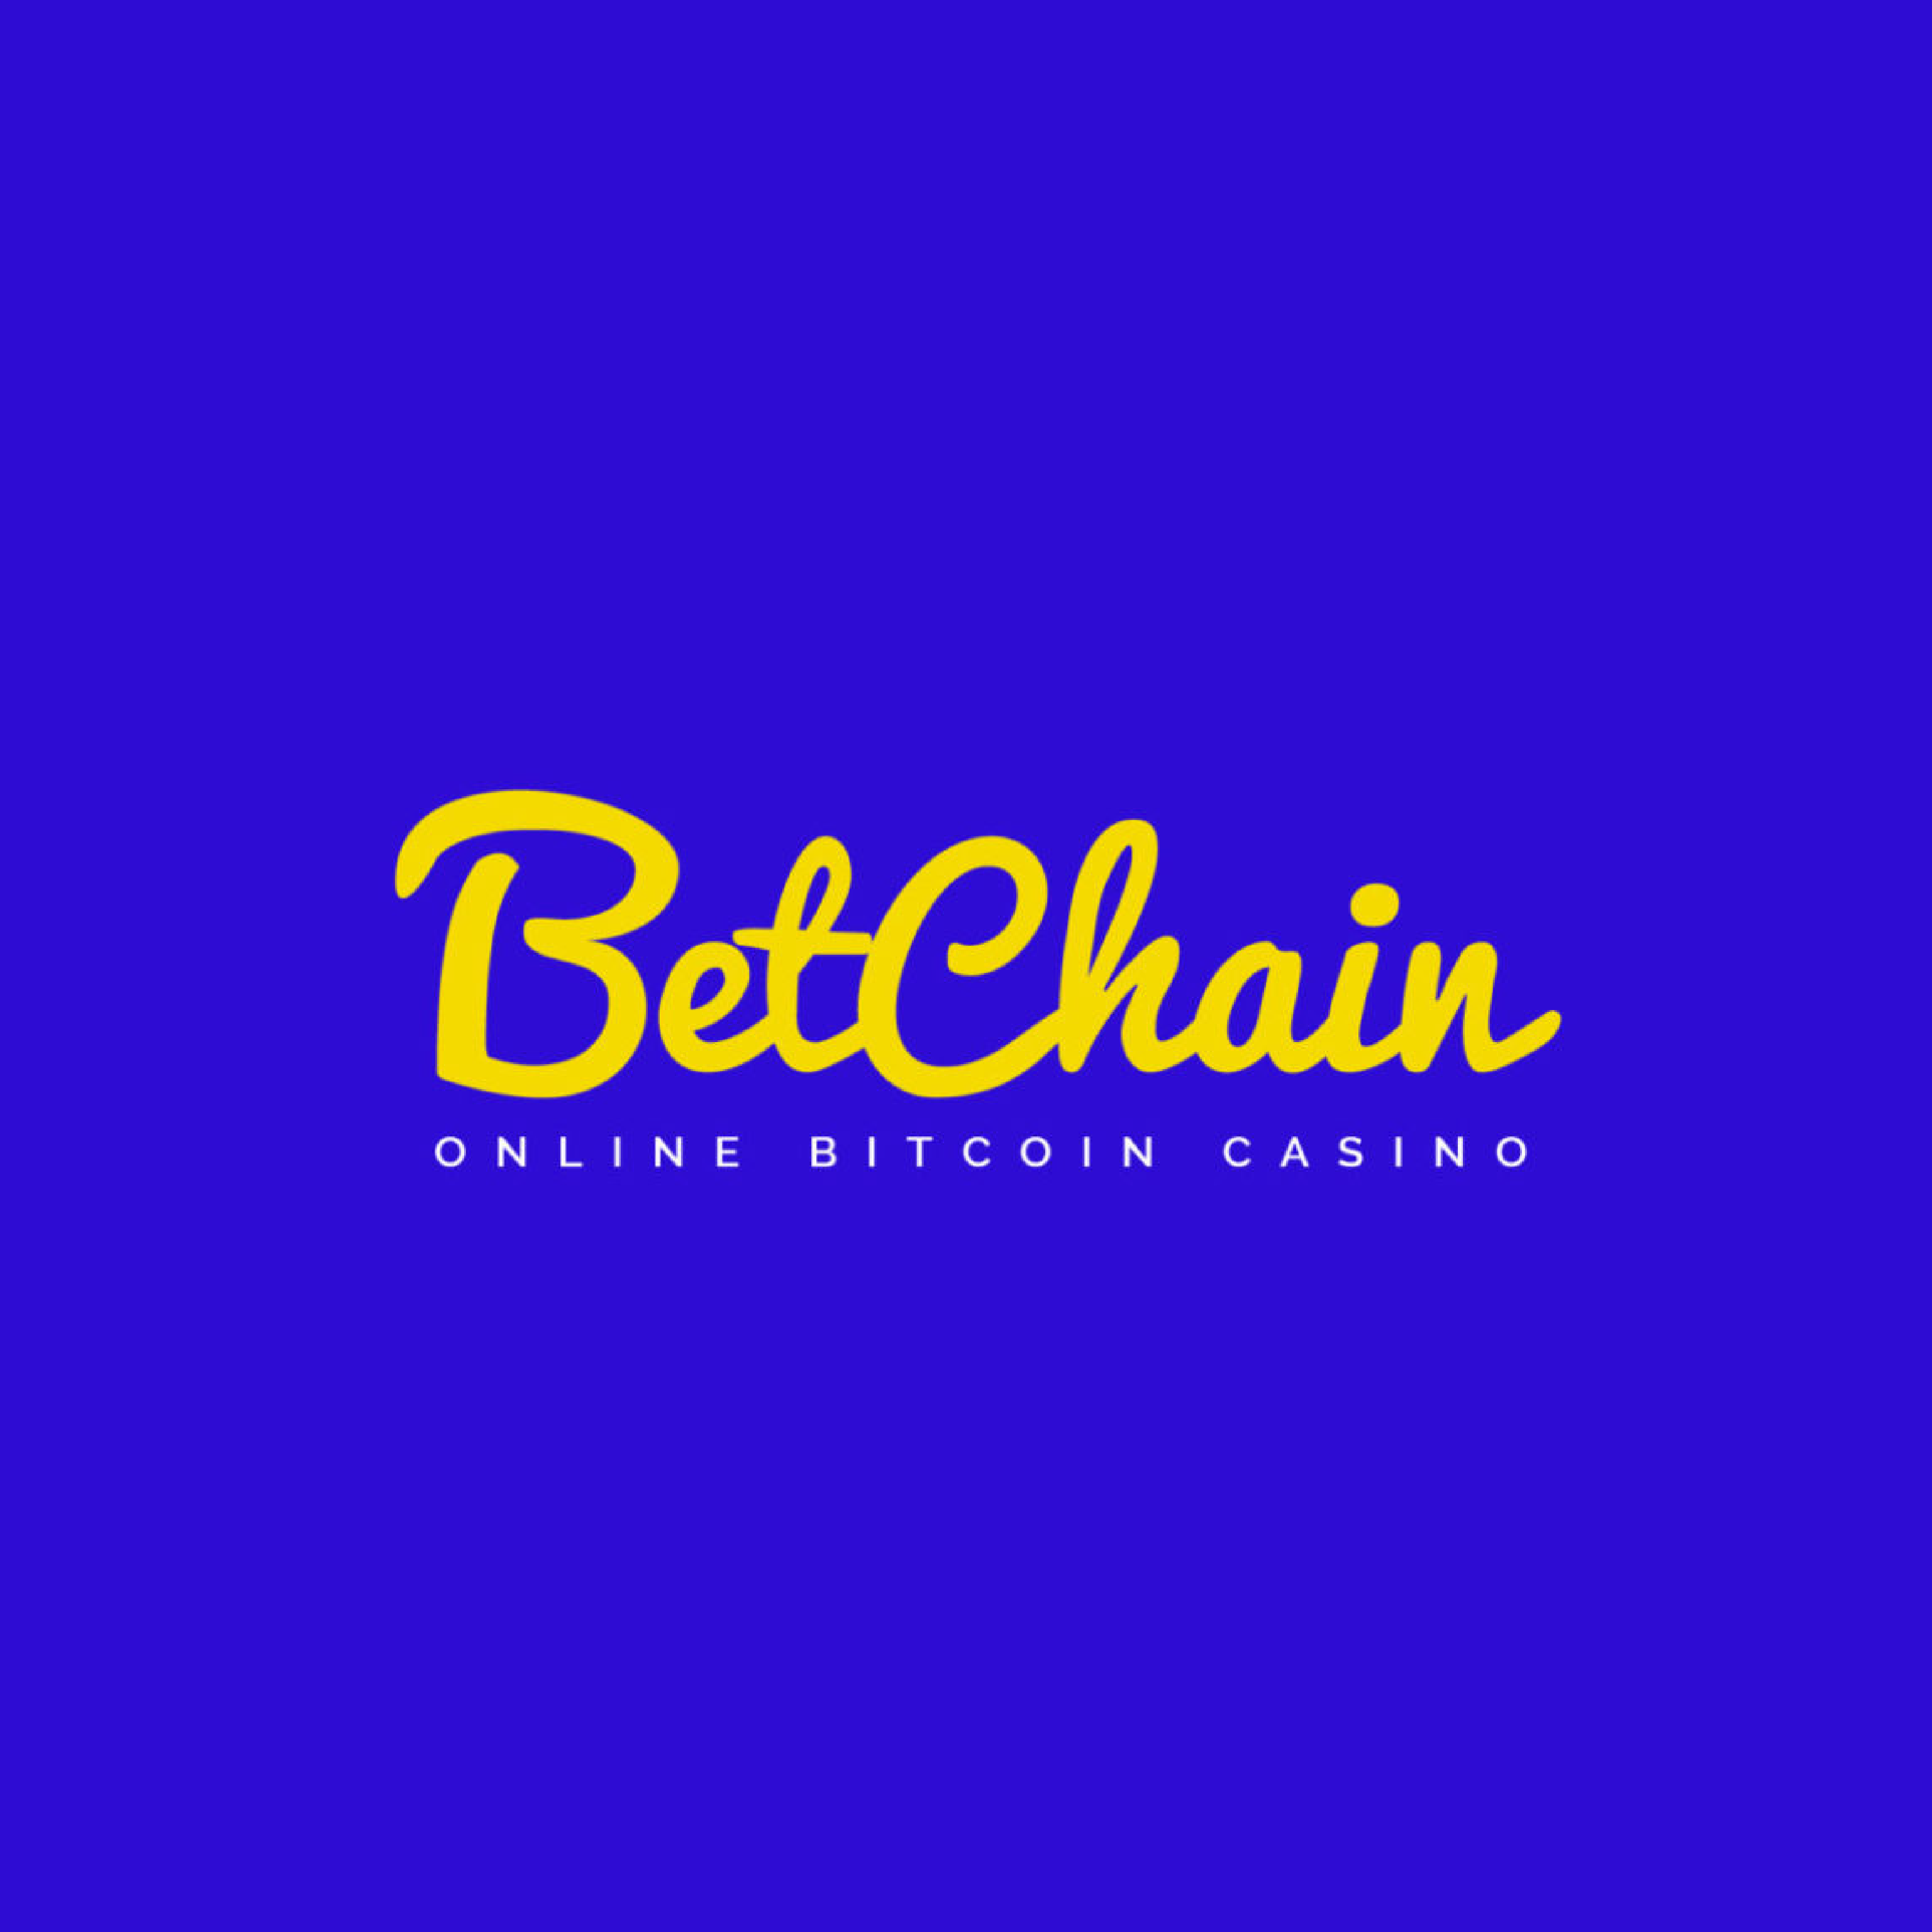 10 euro free bonus bitcoin casino